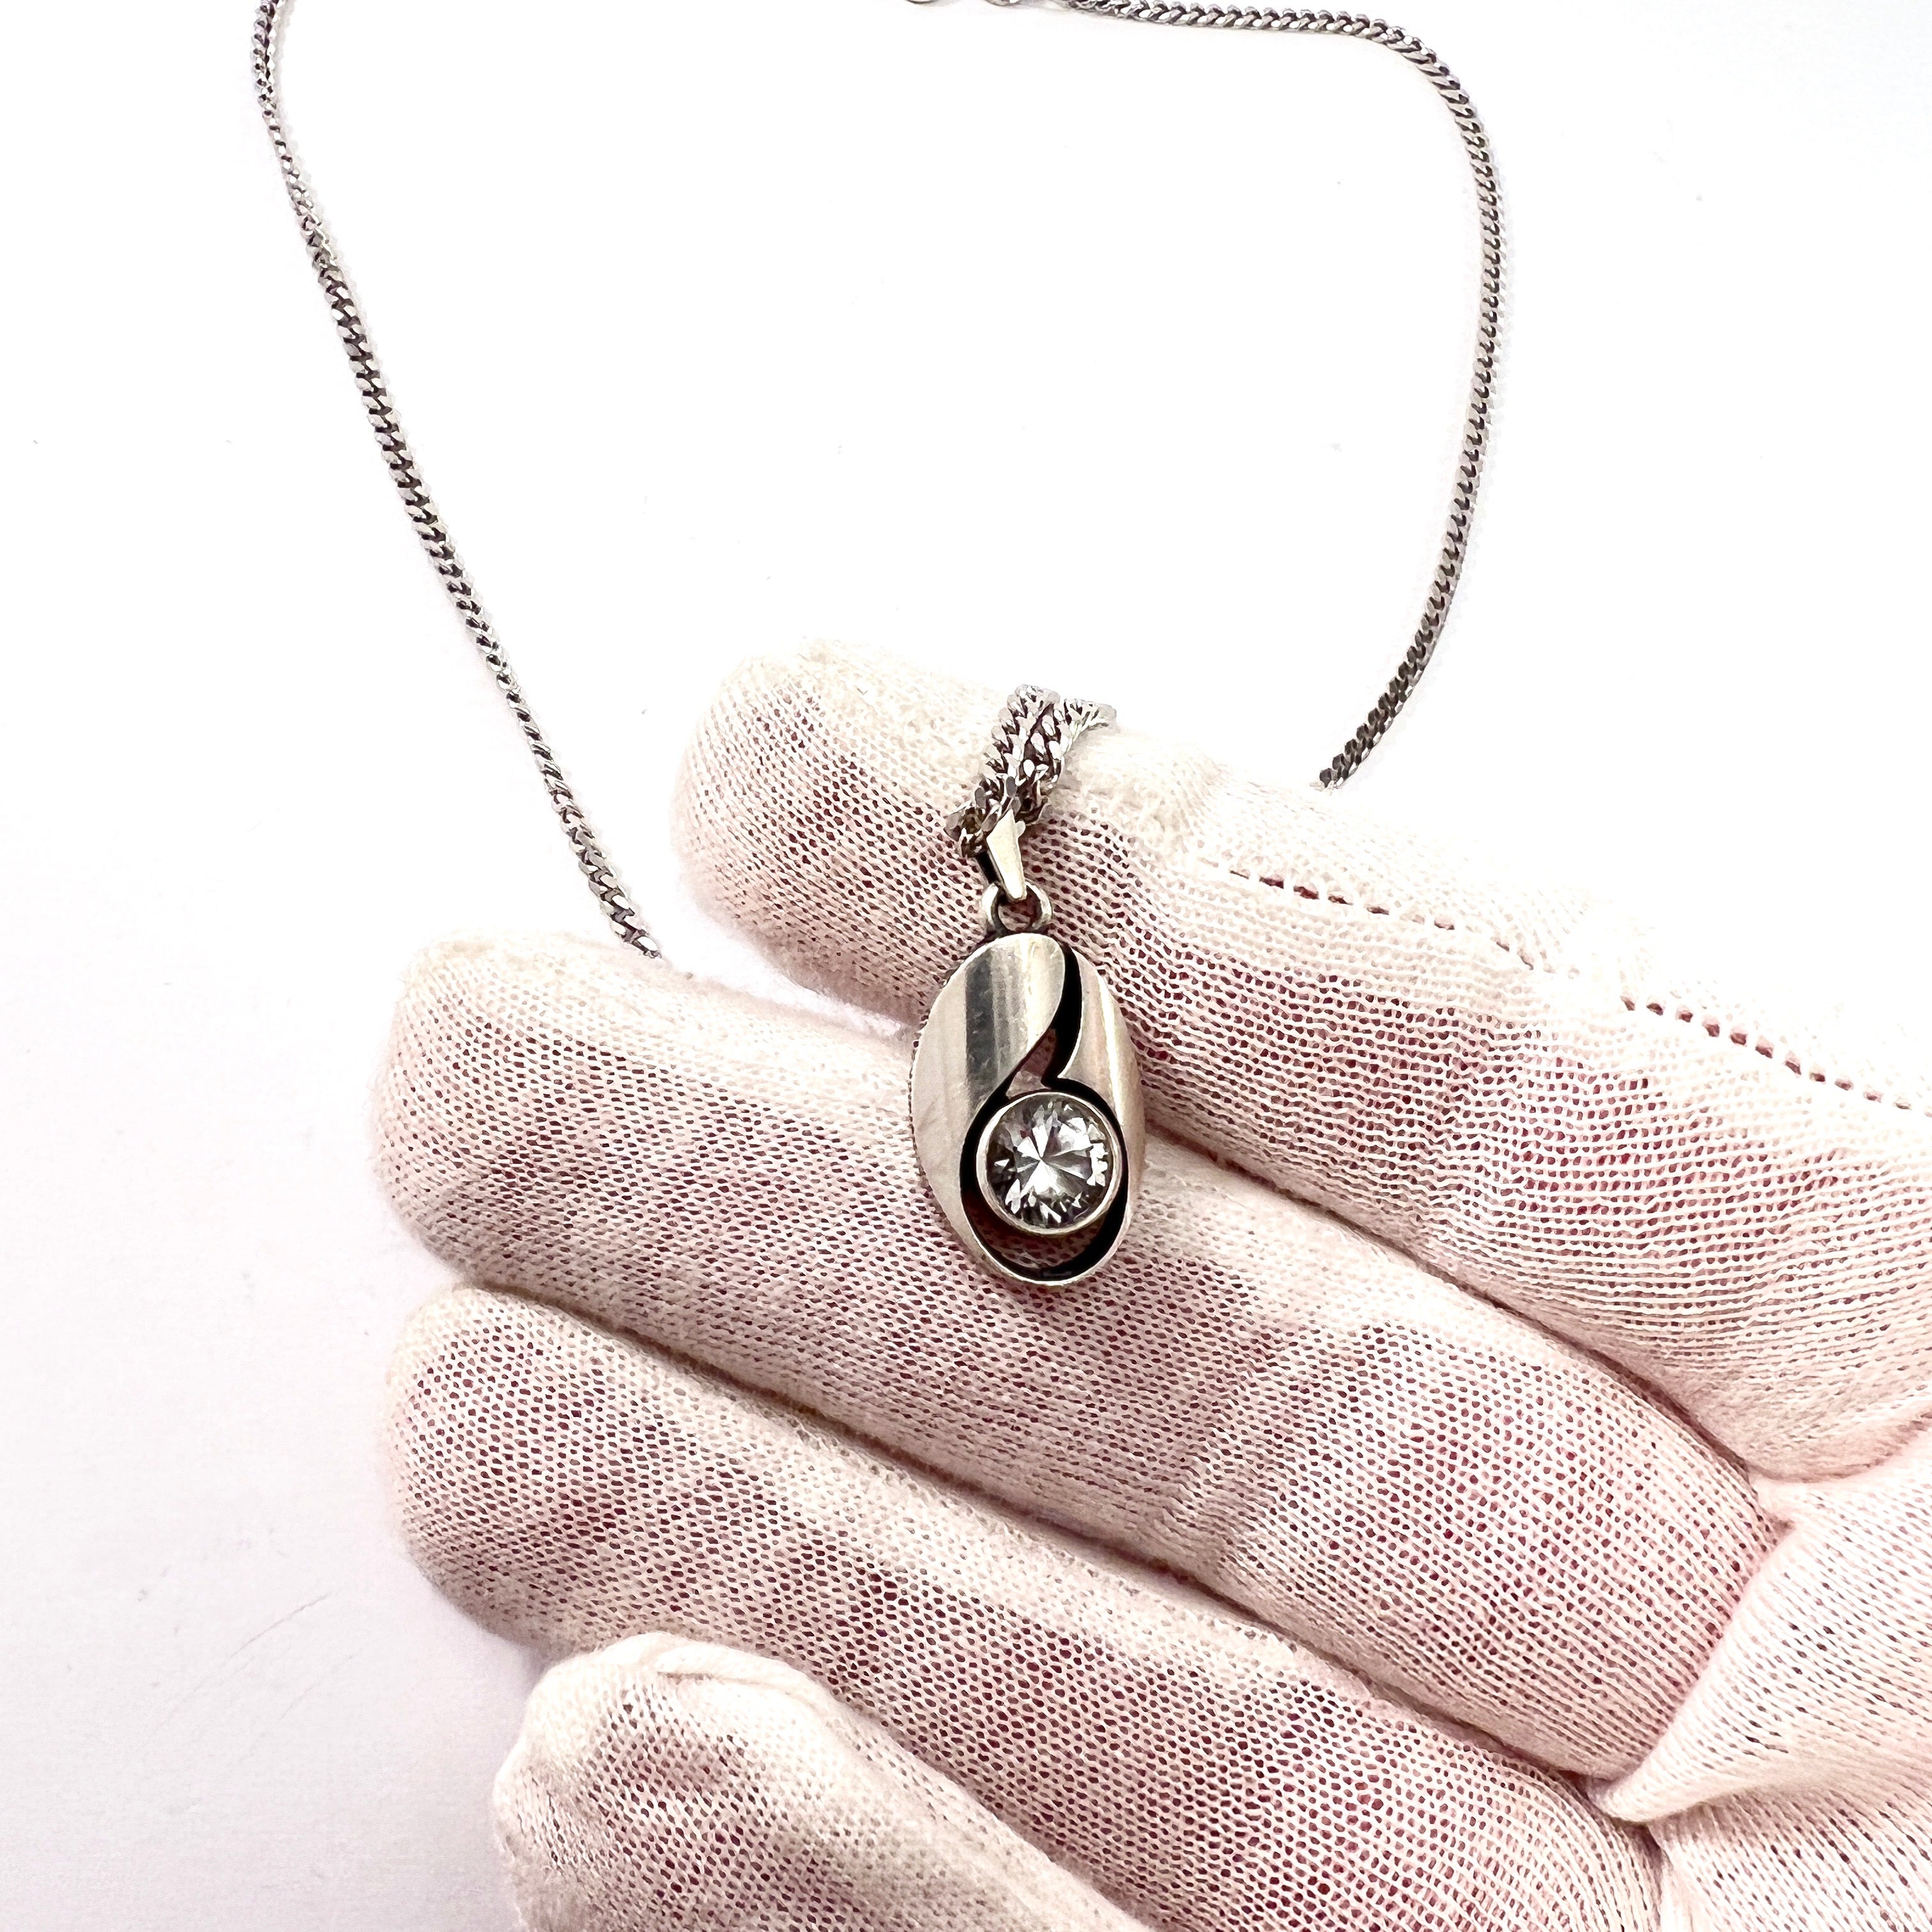 Karl Laine for Finnfeelings, Finland. Vintage Sterling Silver Rock Crystal Pendant Necklace.